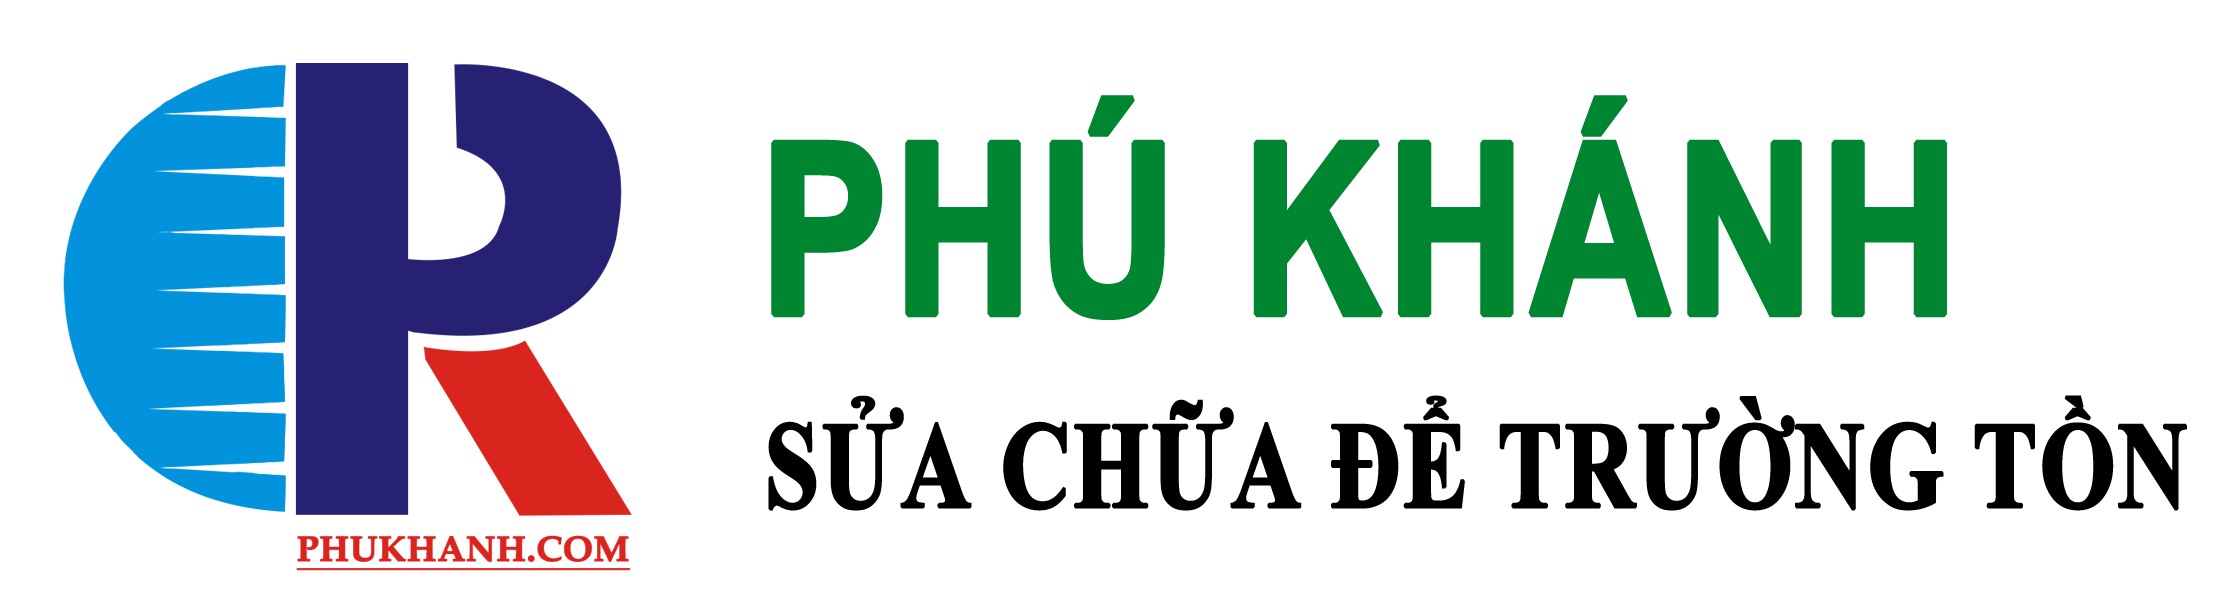 Phu Khanh Co.,Ltd